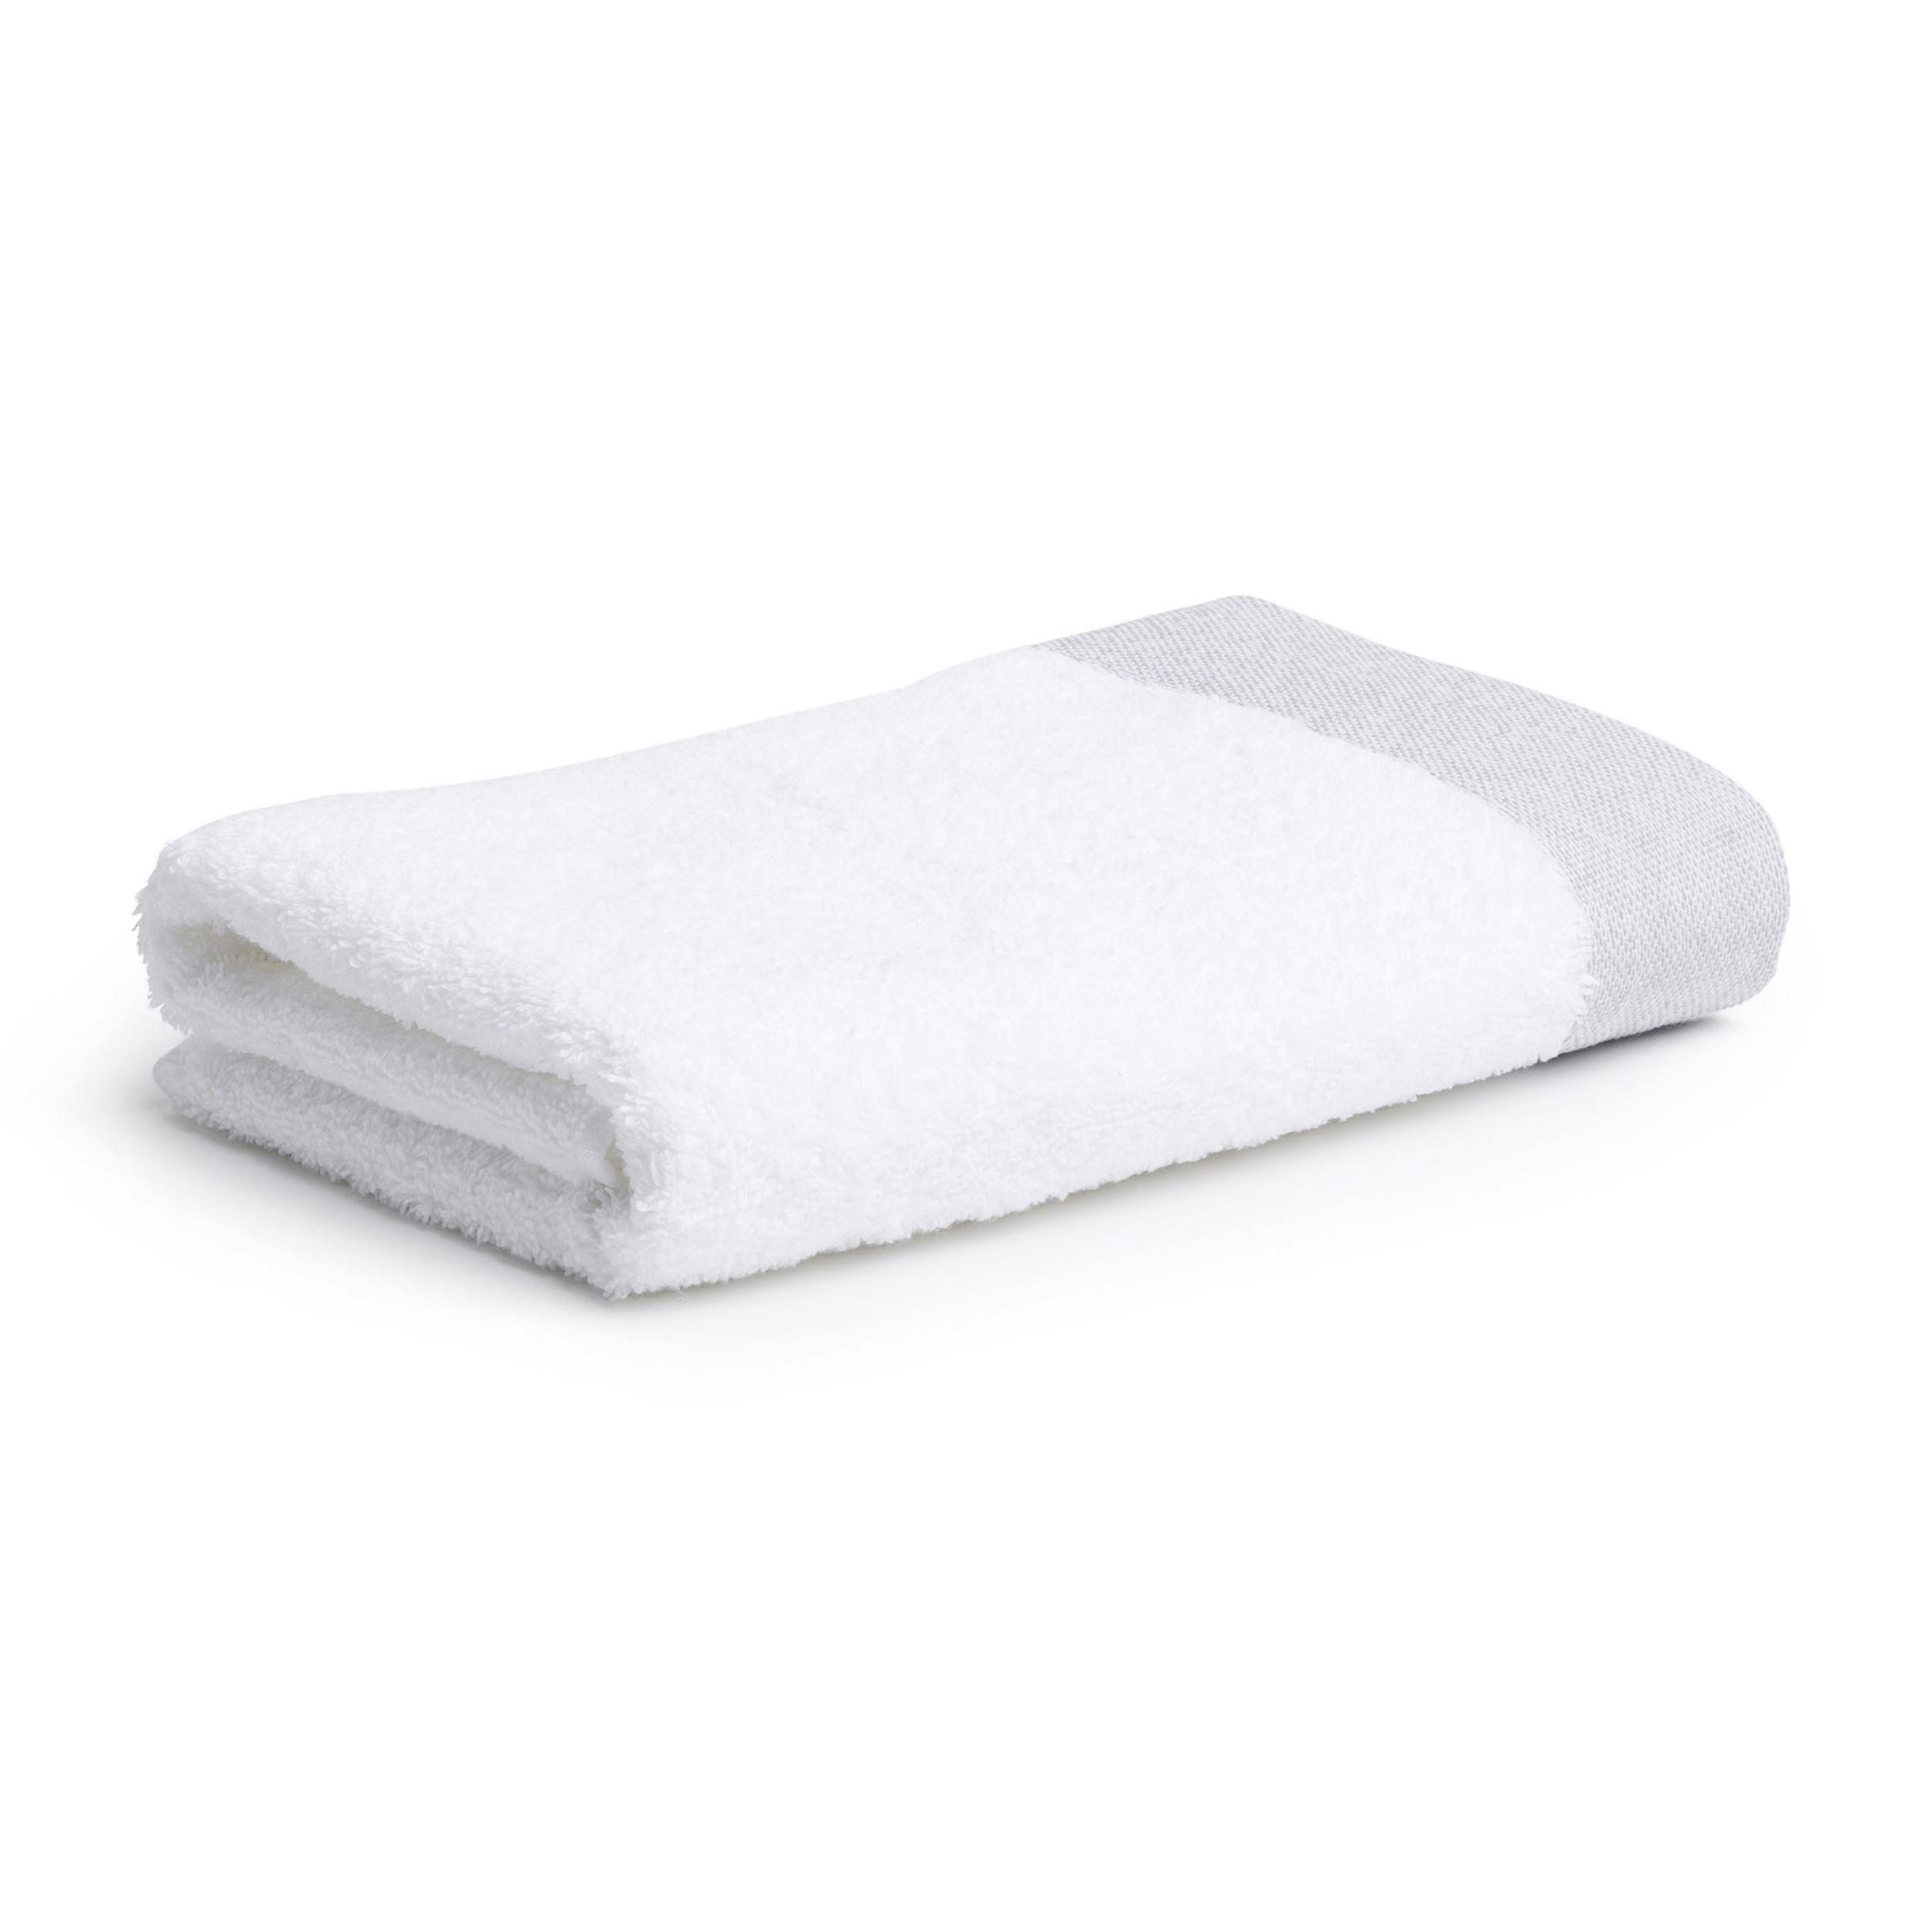 4/8 set éponge gästetuch serviette anthracite duschtuch serviette 100% coton 